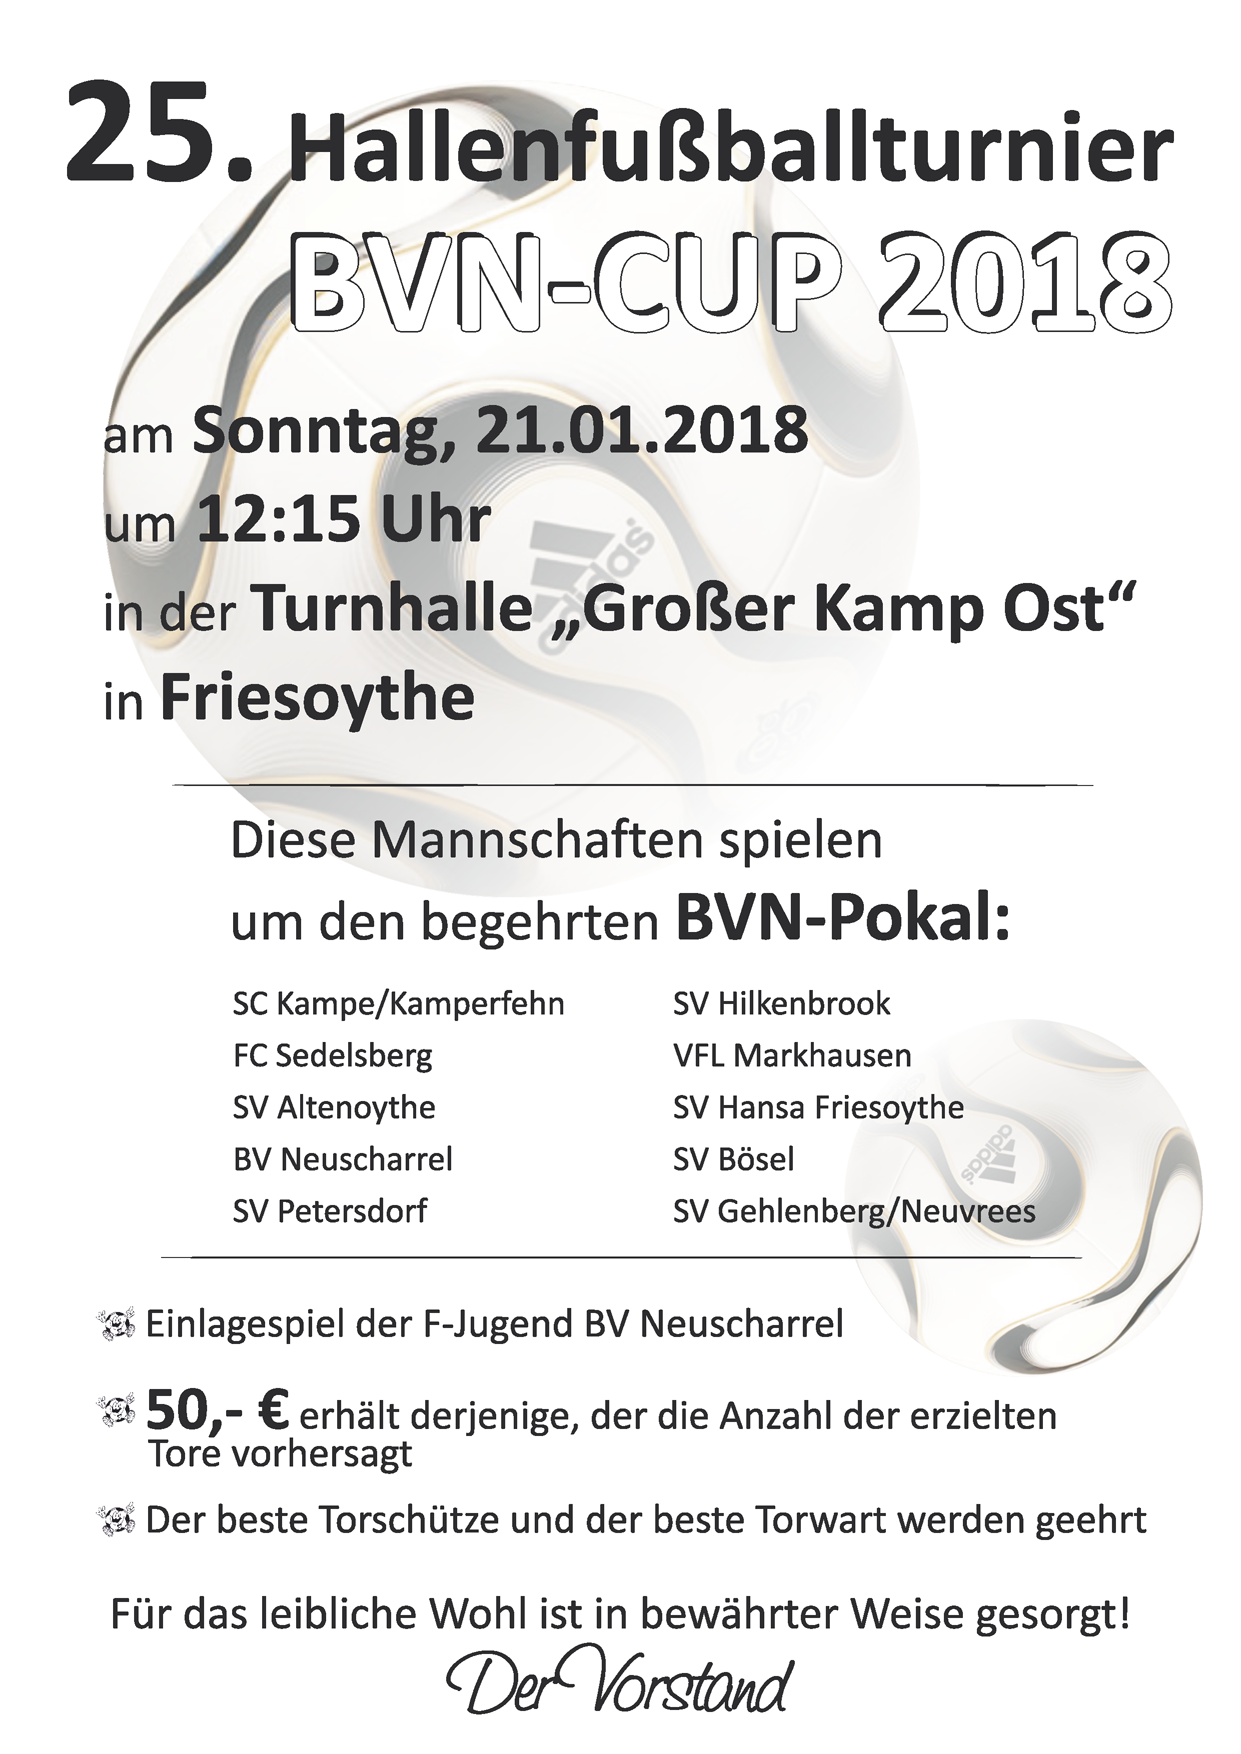 BVN-Cup 2018